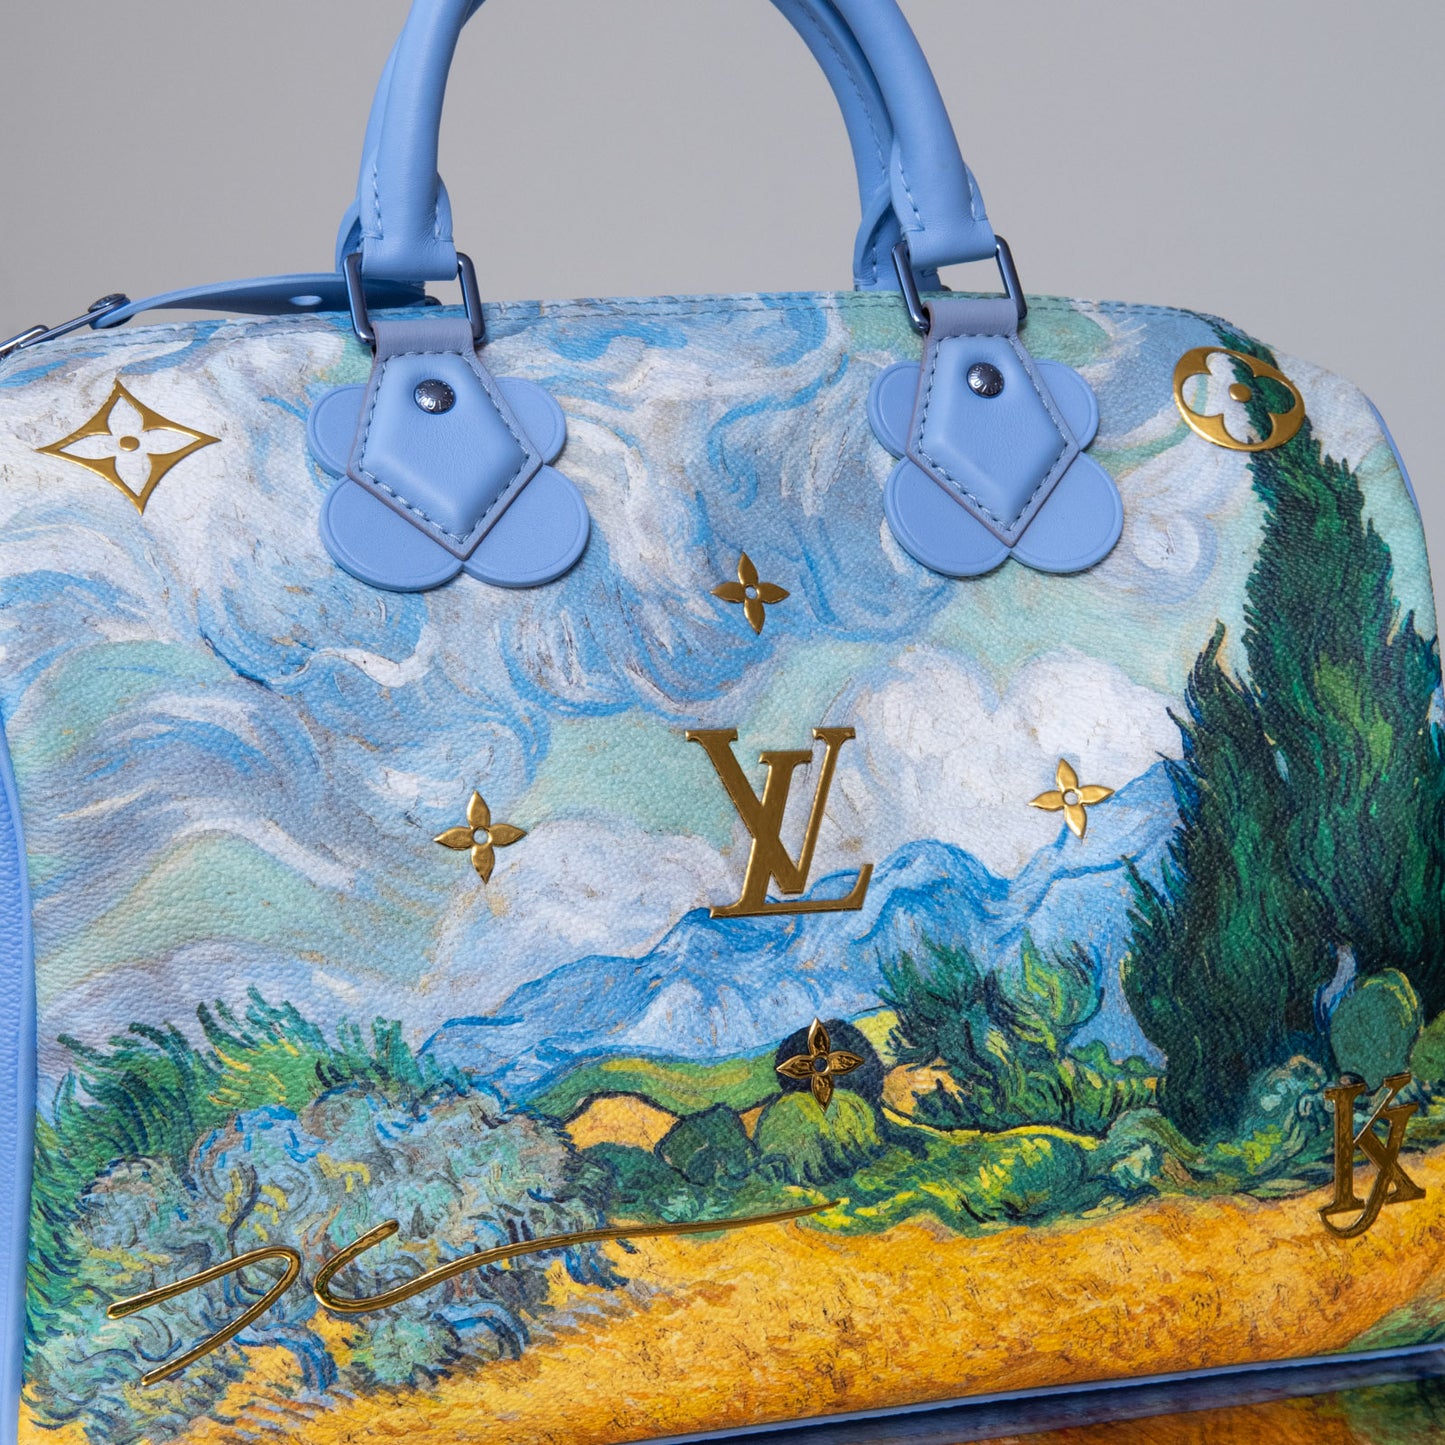 Louis Vuitton Limited Edition Masters Van Gogh Speedy 30 Satchel